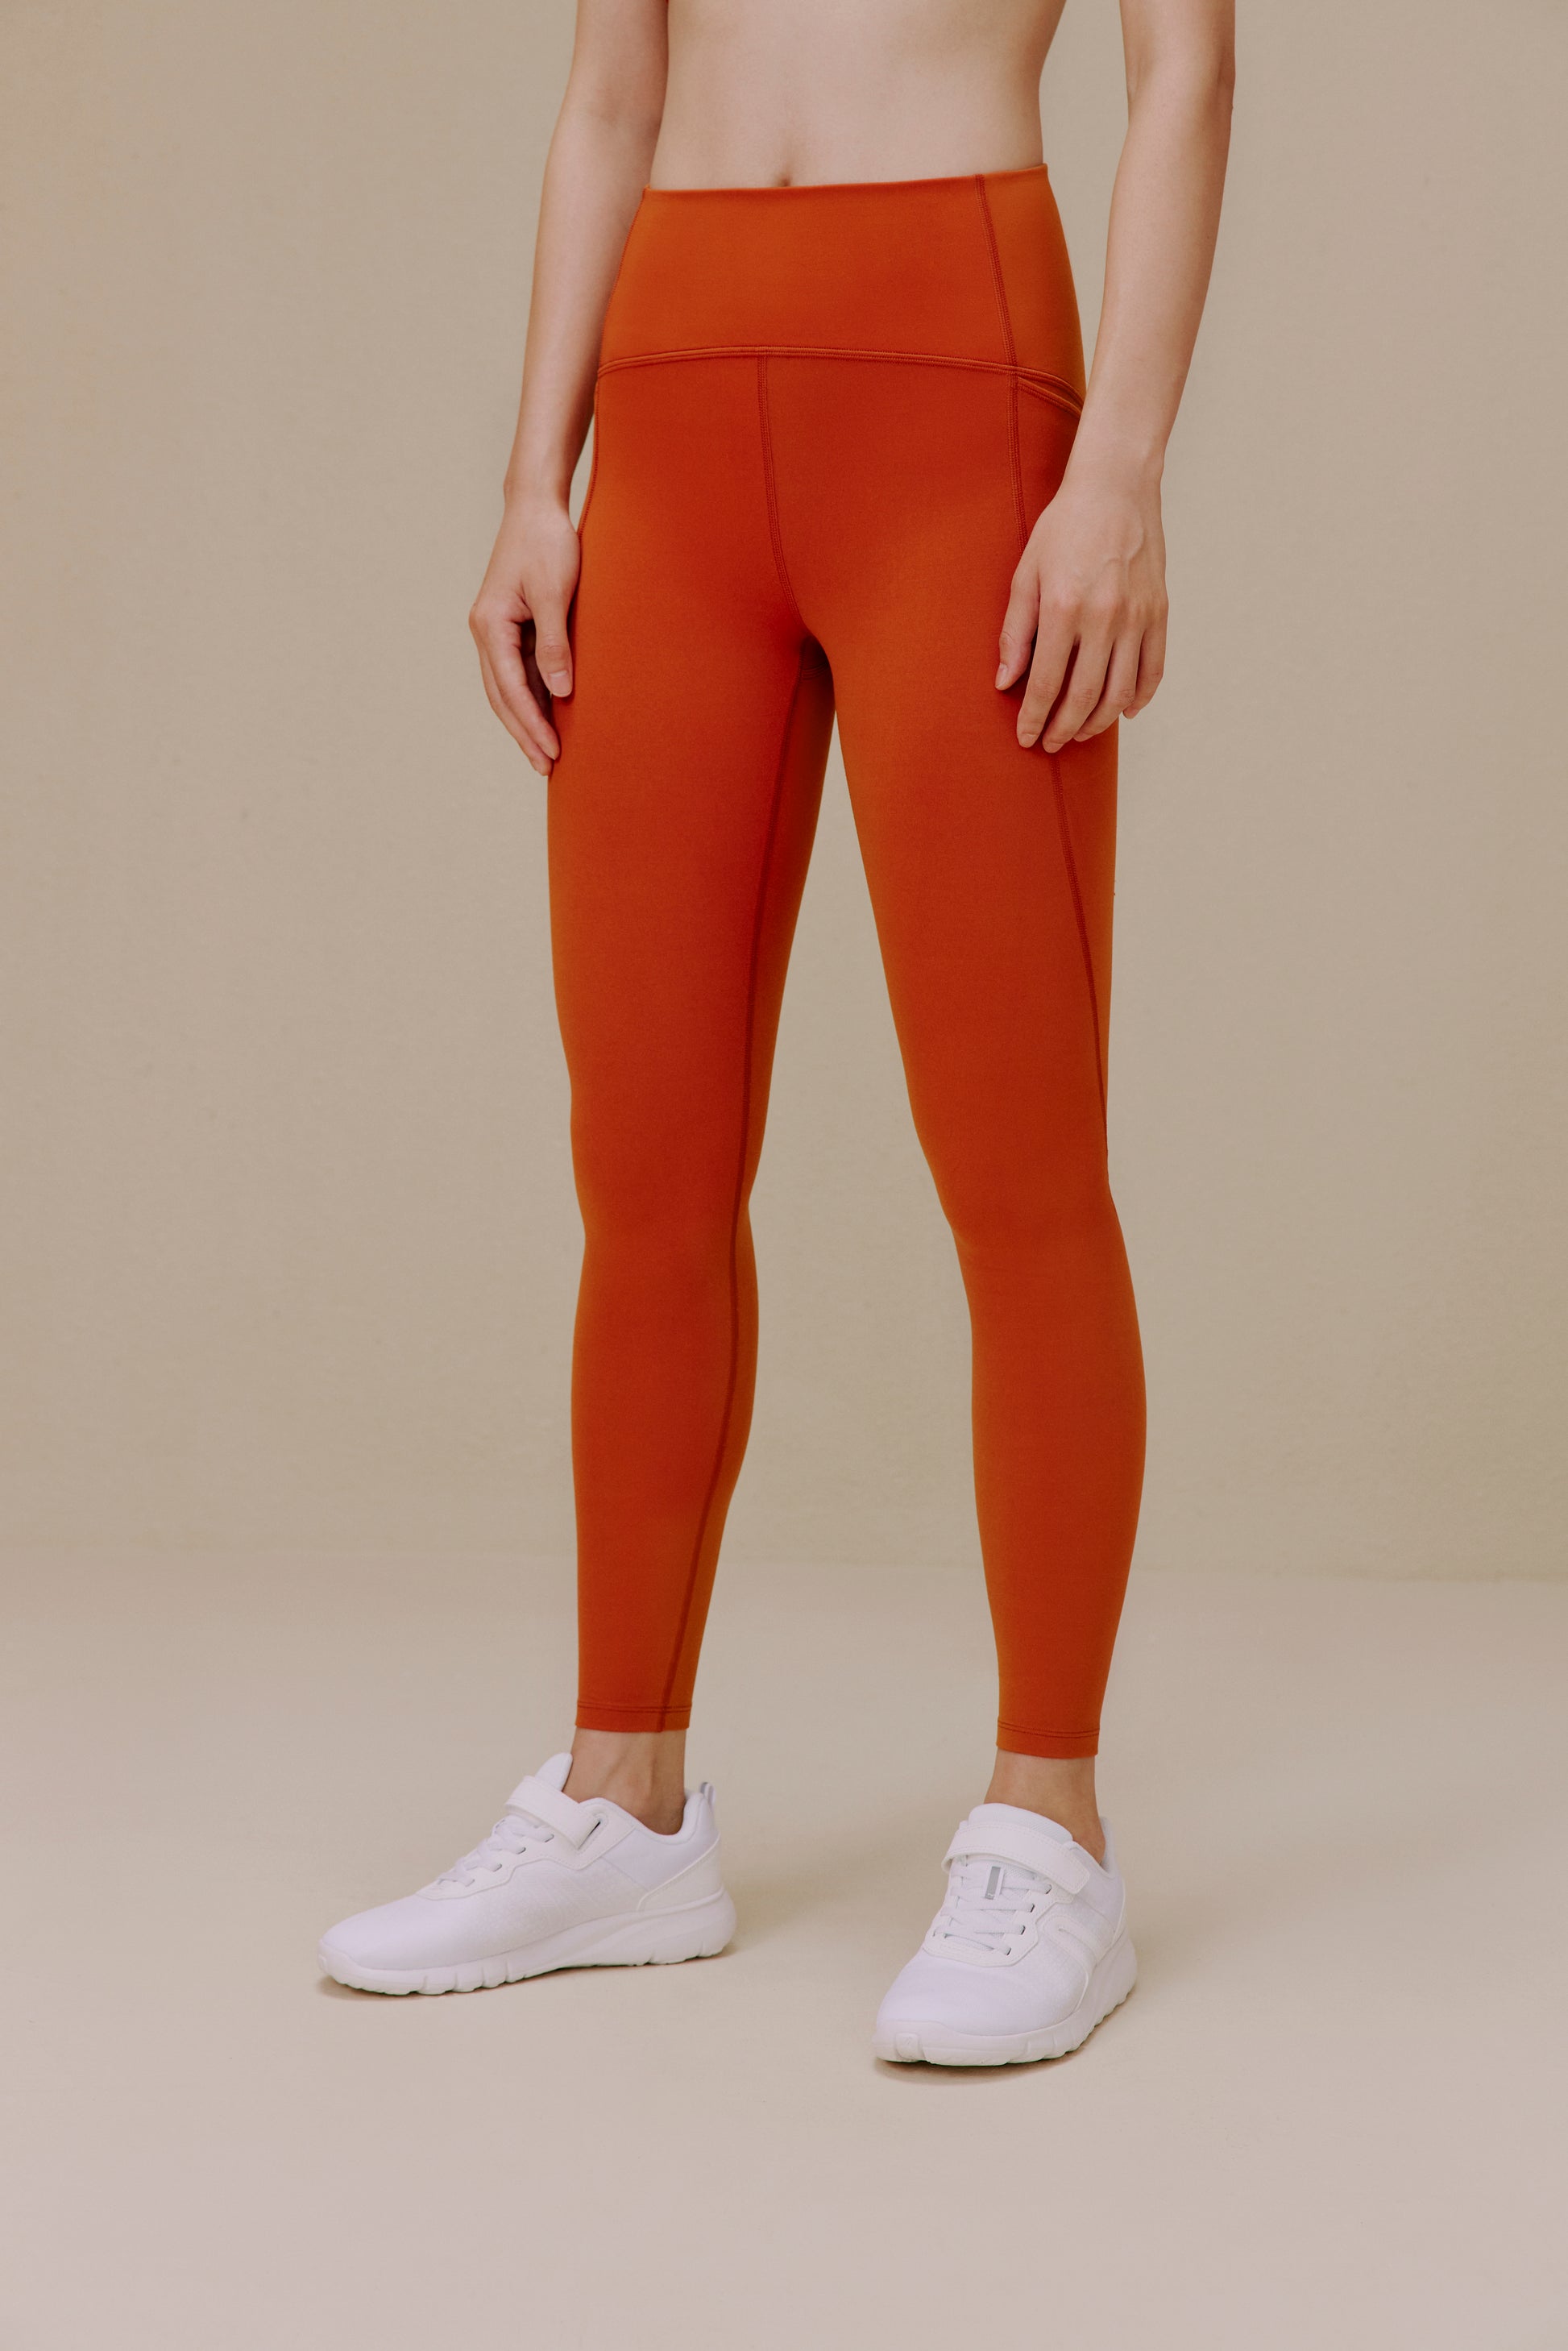 Girlfriend Collective Burnt Orange seamless high waist leggings XL NWT